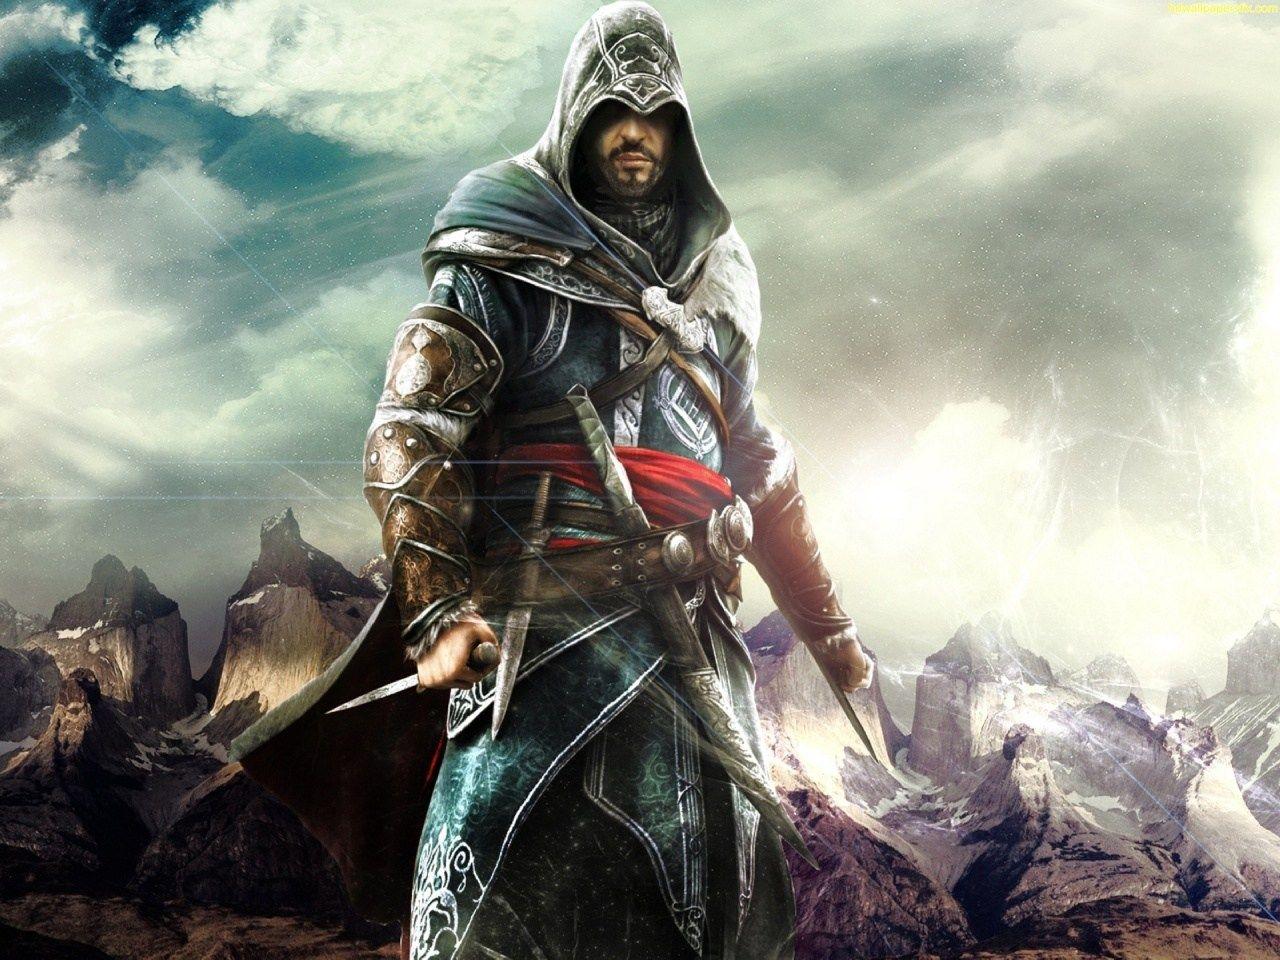 Assasin's Creed, Ezio Auditore da Firenze. Assassin's creed